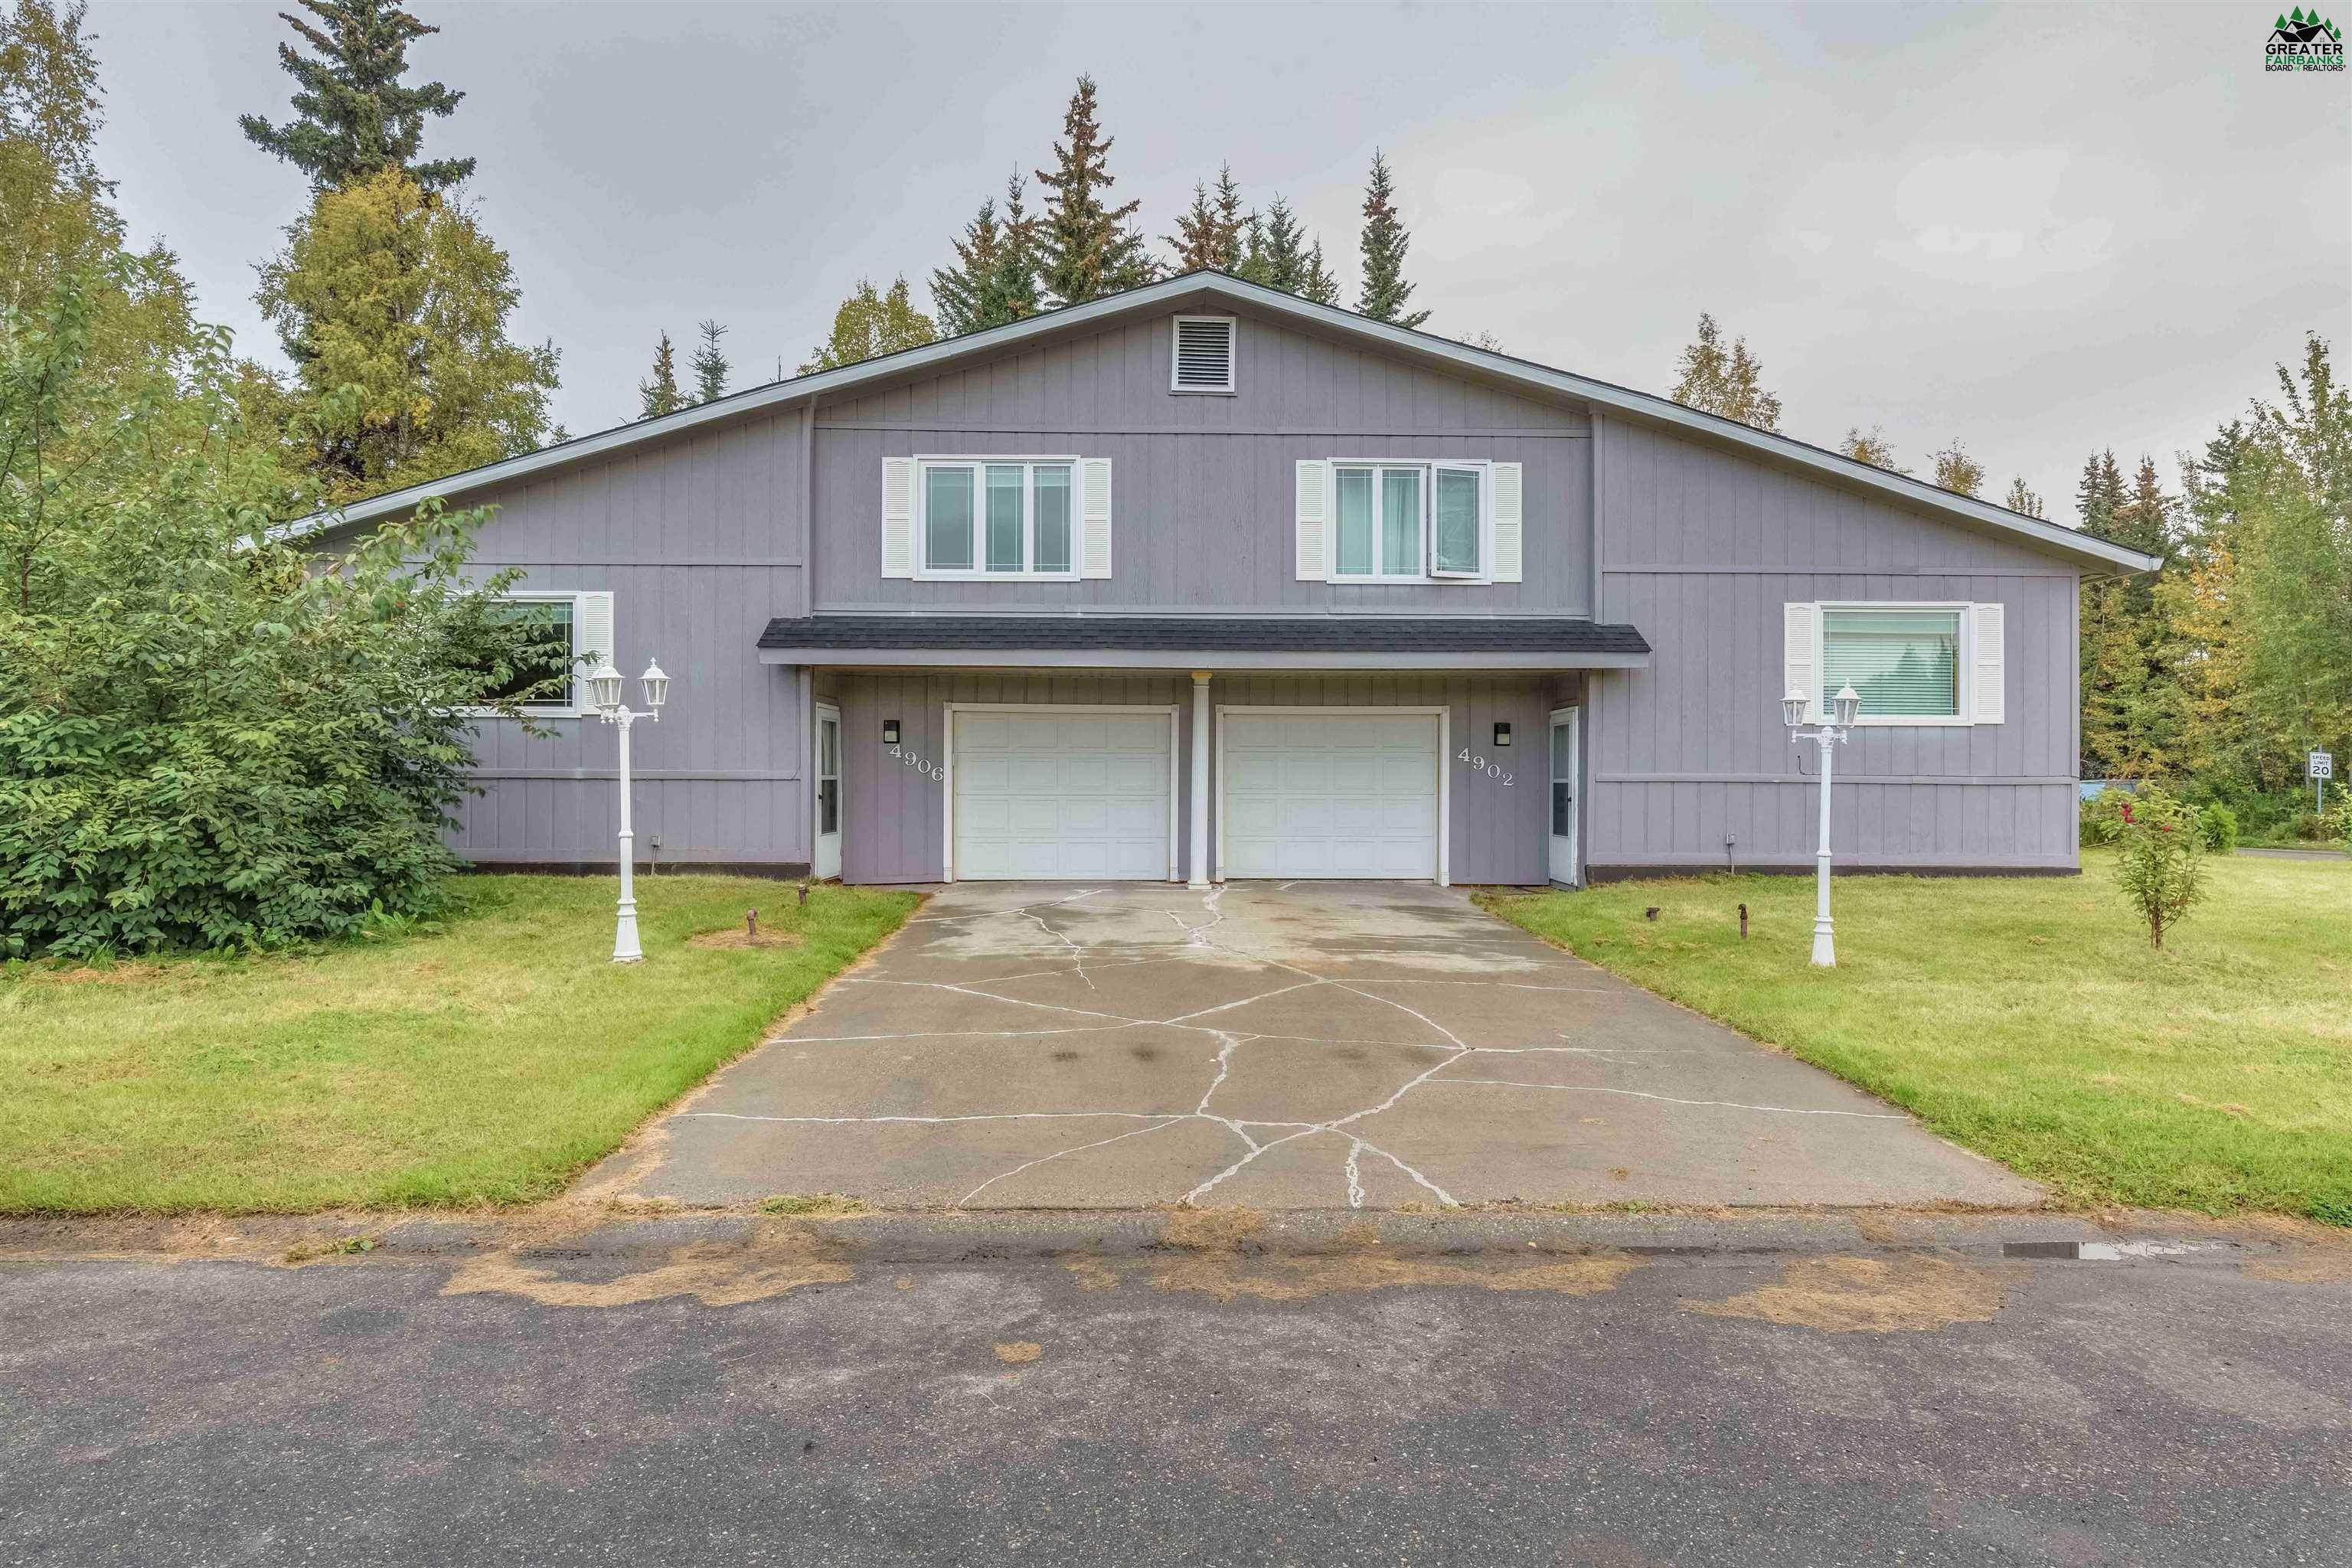 Duplex Homes for Sale at 4902 AMHERST DRIVE Fairbanks, Alaska 99709 United States